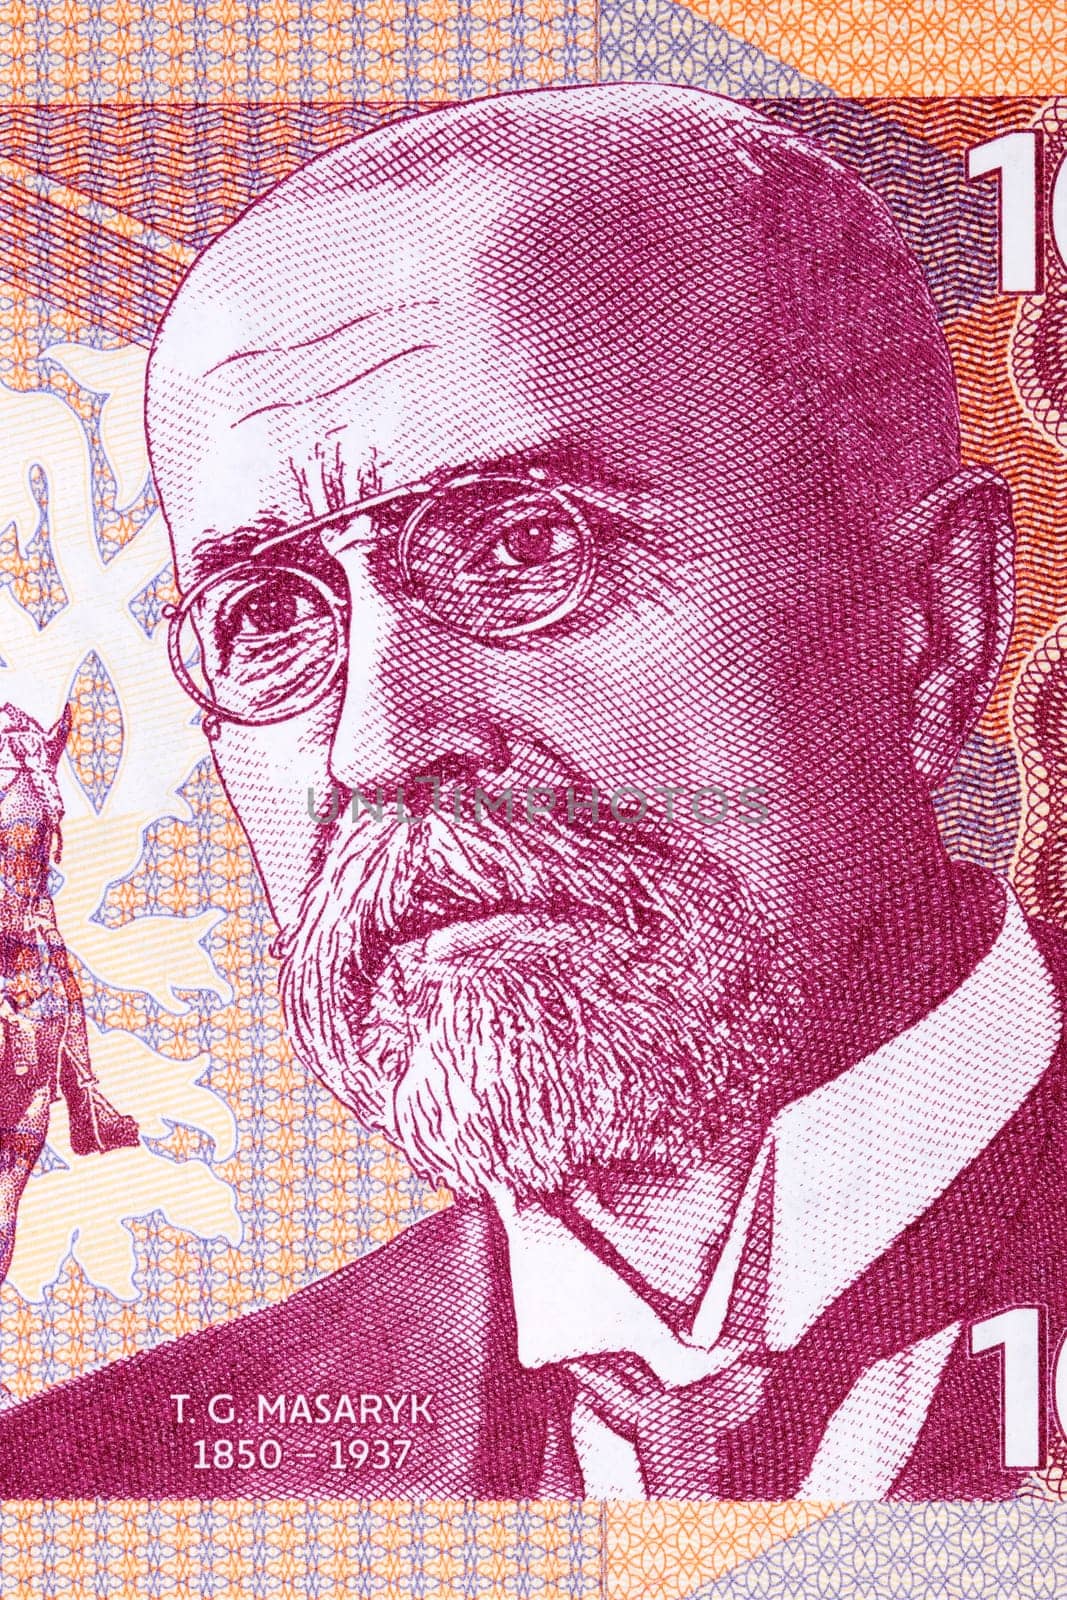 Tomas Garrigue Masaryk a portrait from Czechoslovak money